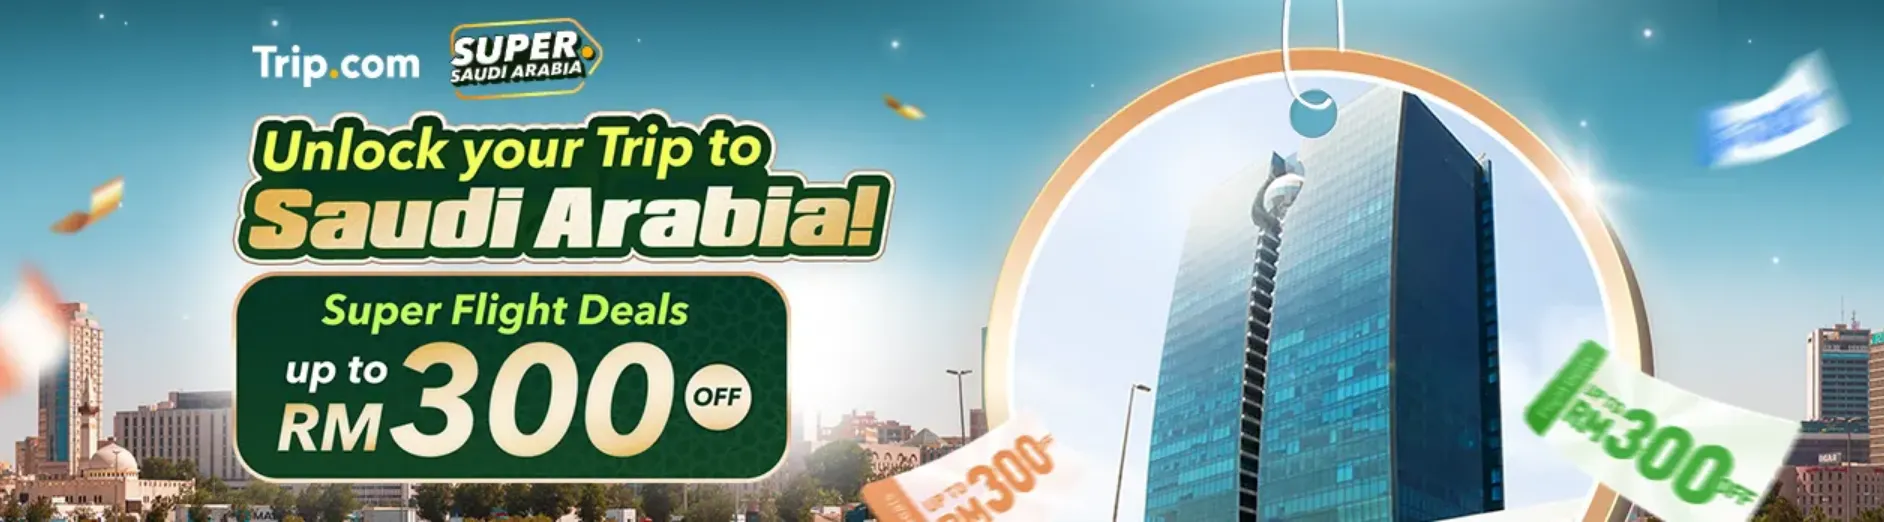 Trip.com Promo Code Malaysia: Saudi Aribia Super Sale